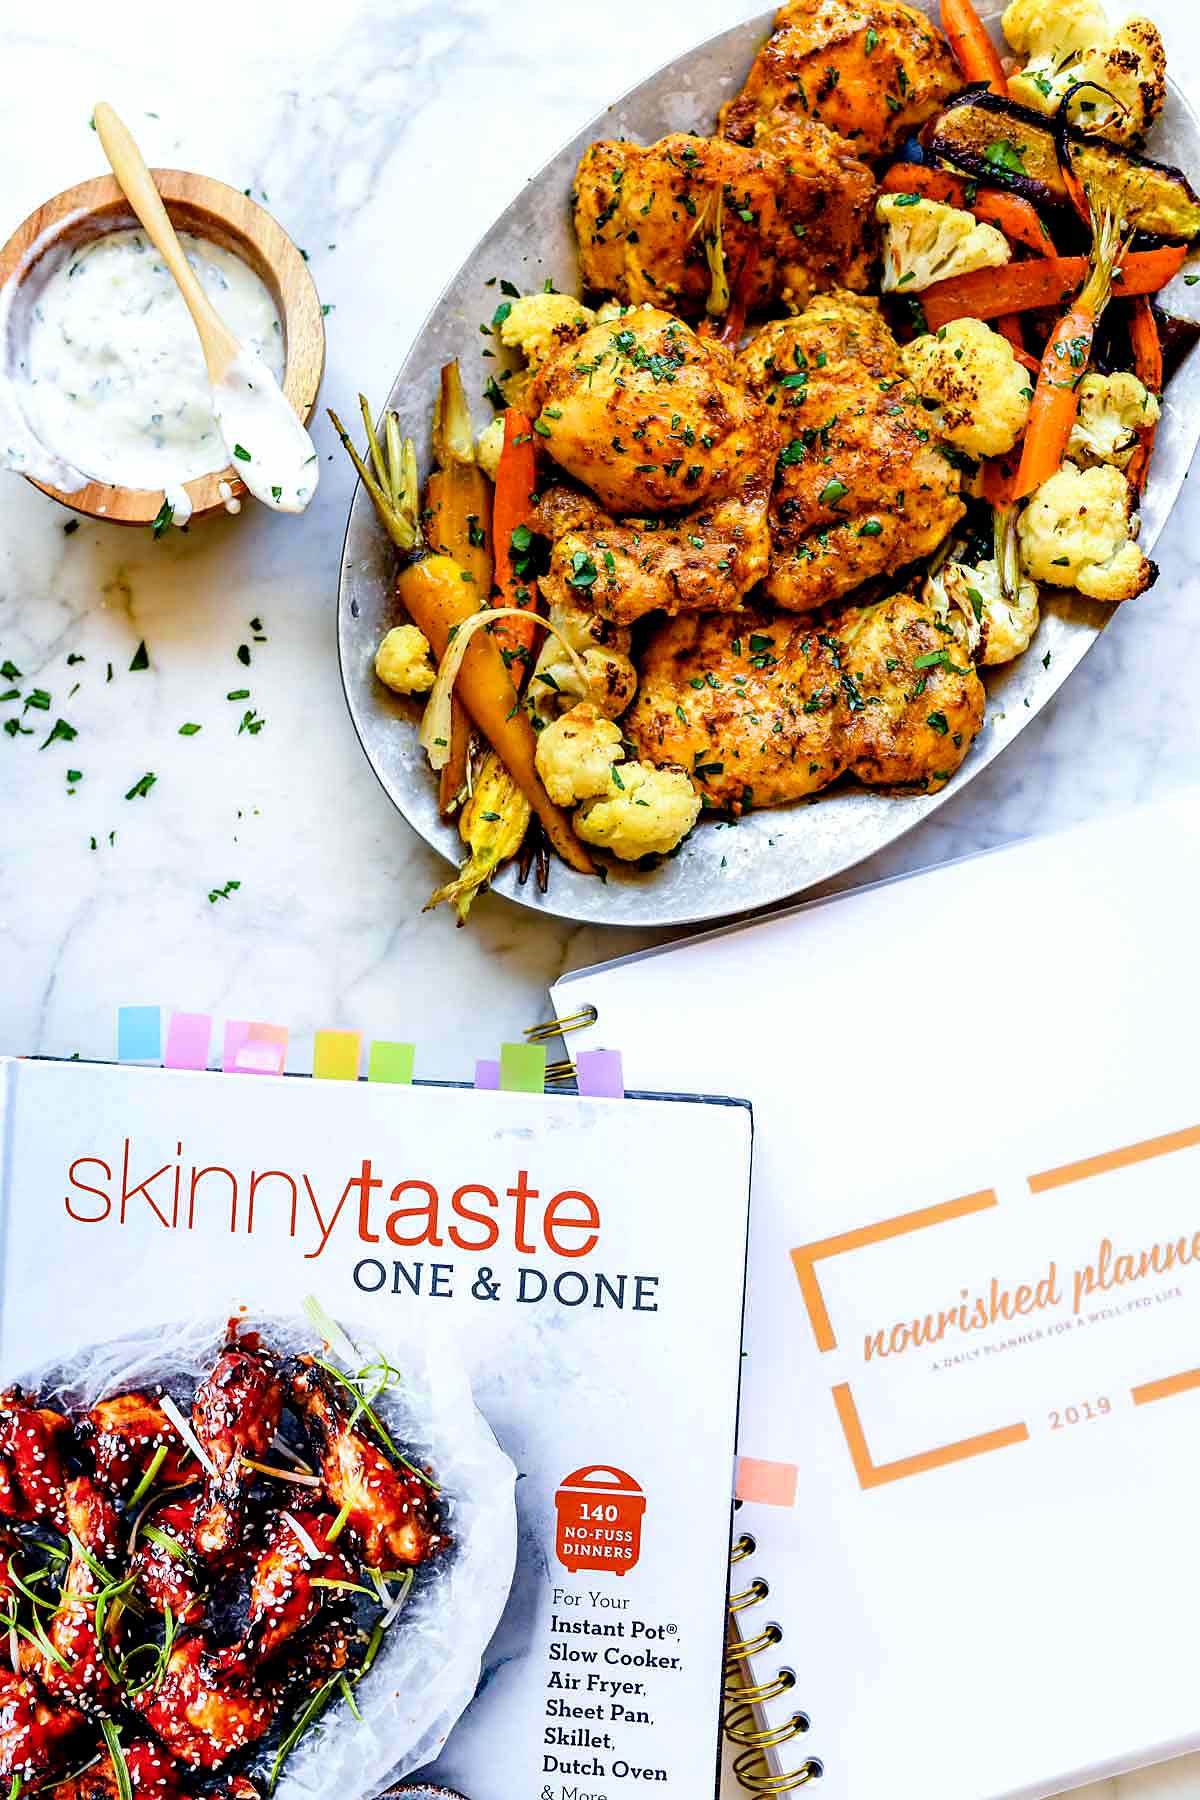 Poulet Tandoori Recipe from Skinnytaste One and Done Cookbook | foodiecrush.com